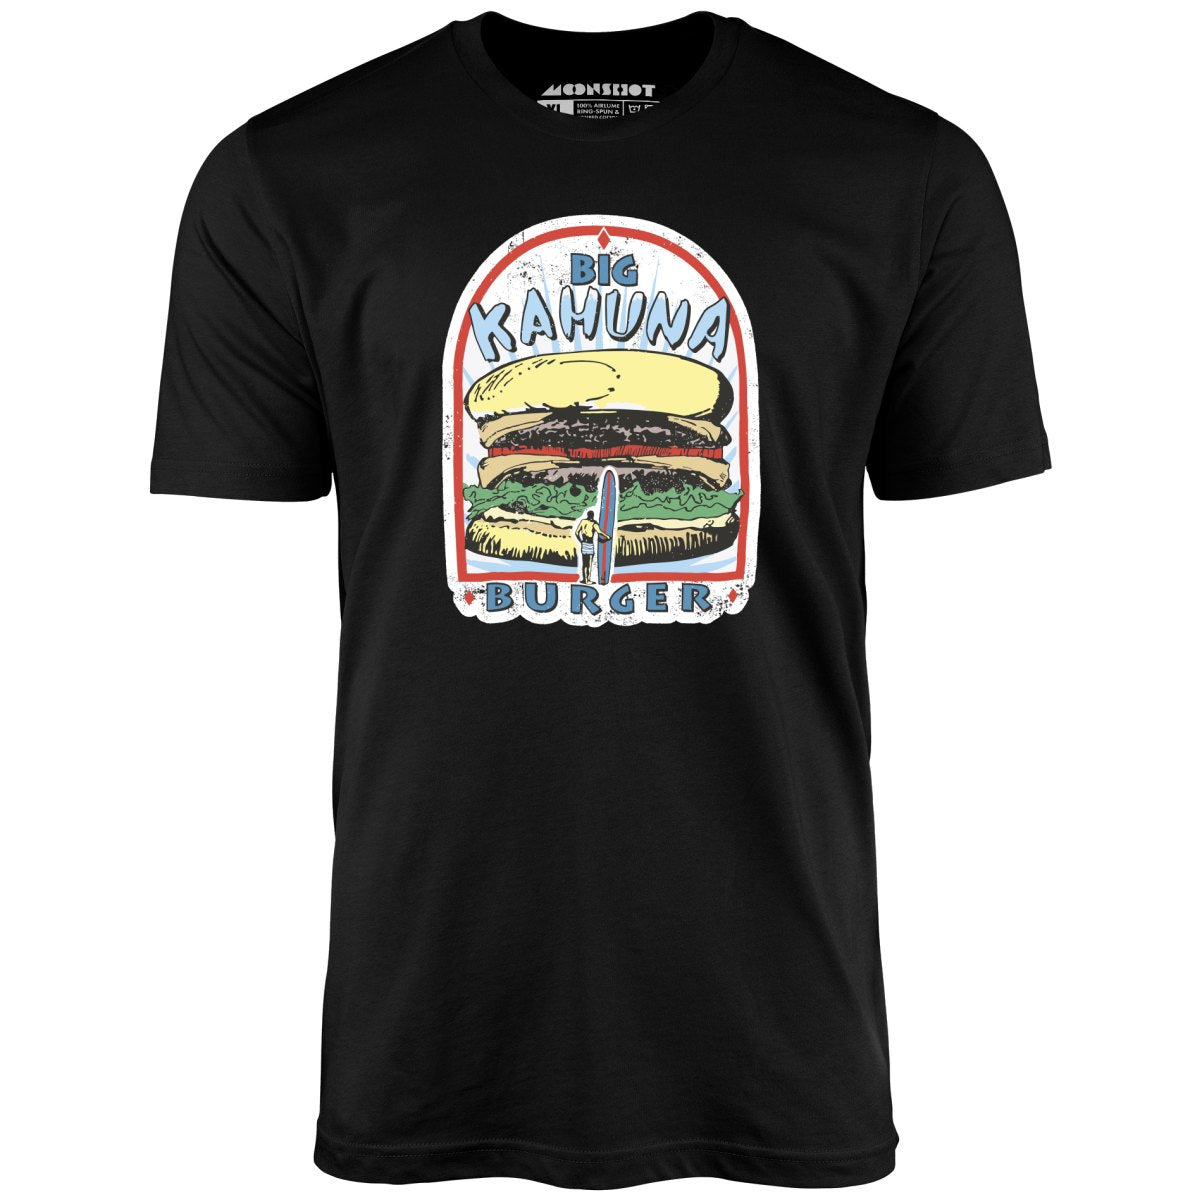 Big Kahuna Burger - Unisex T-Shirt